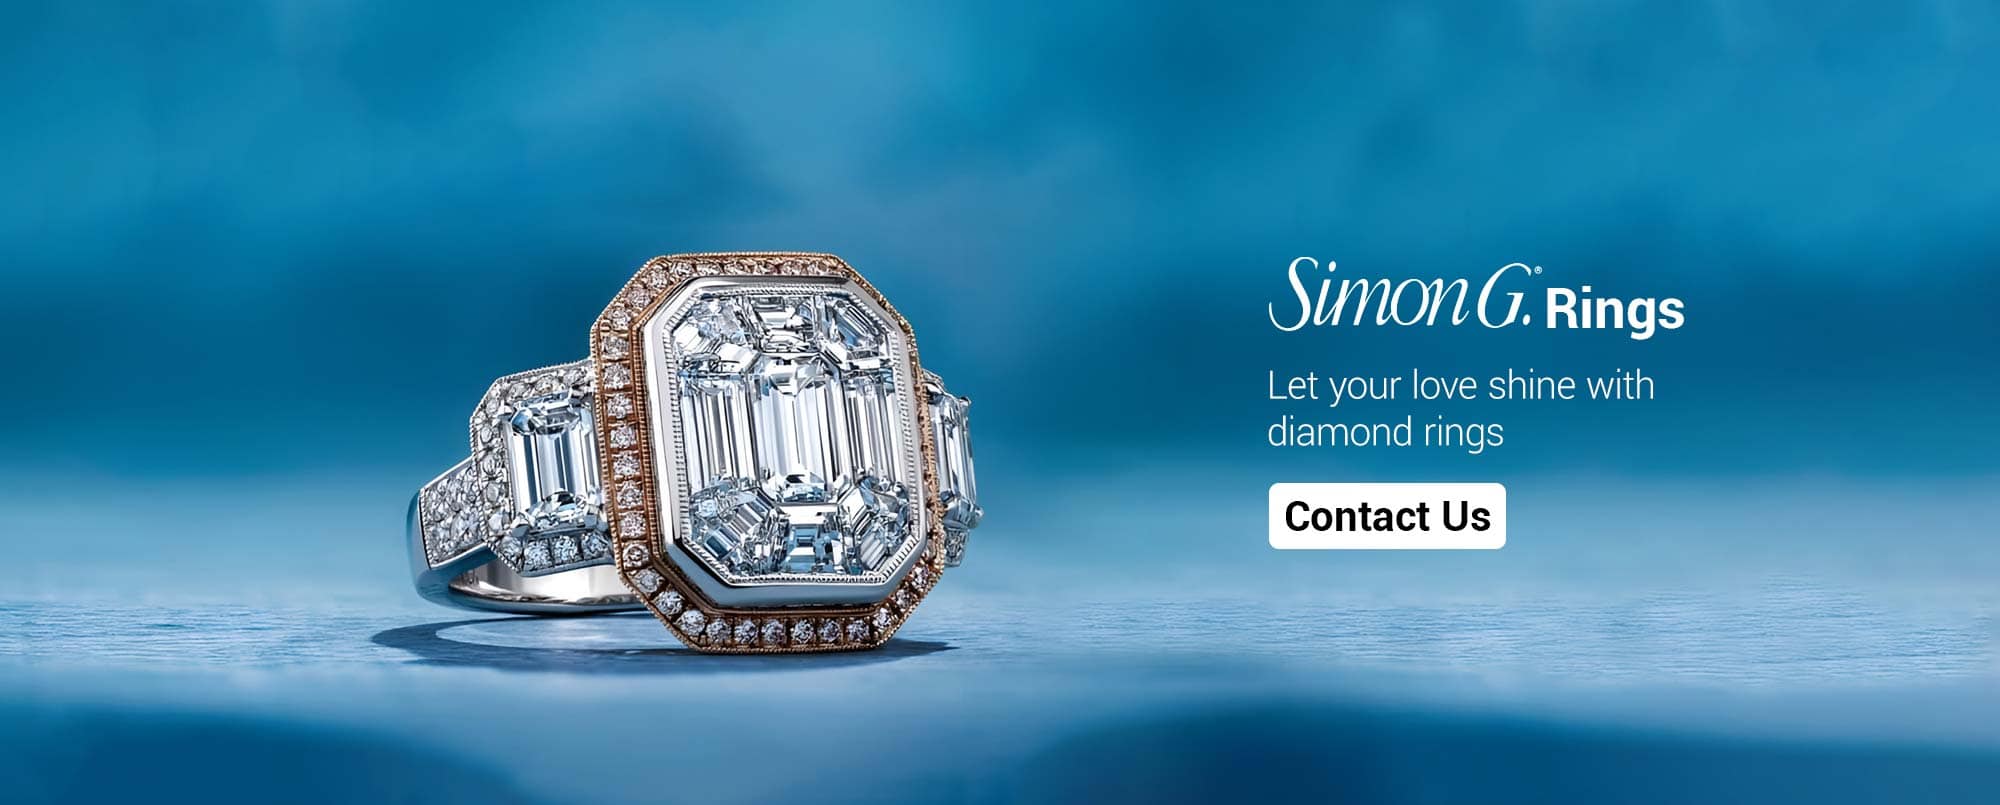 Simong Rings Collection At Hinz Jewelers